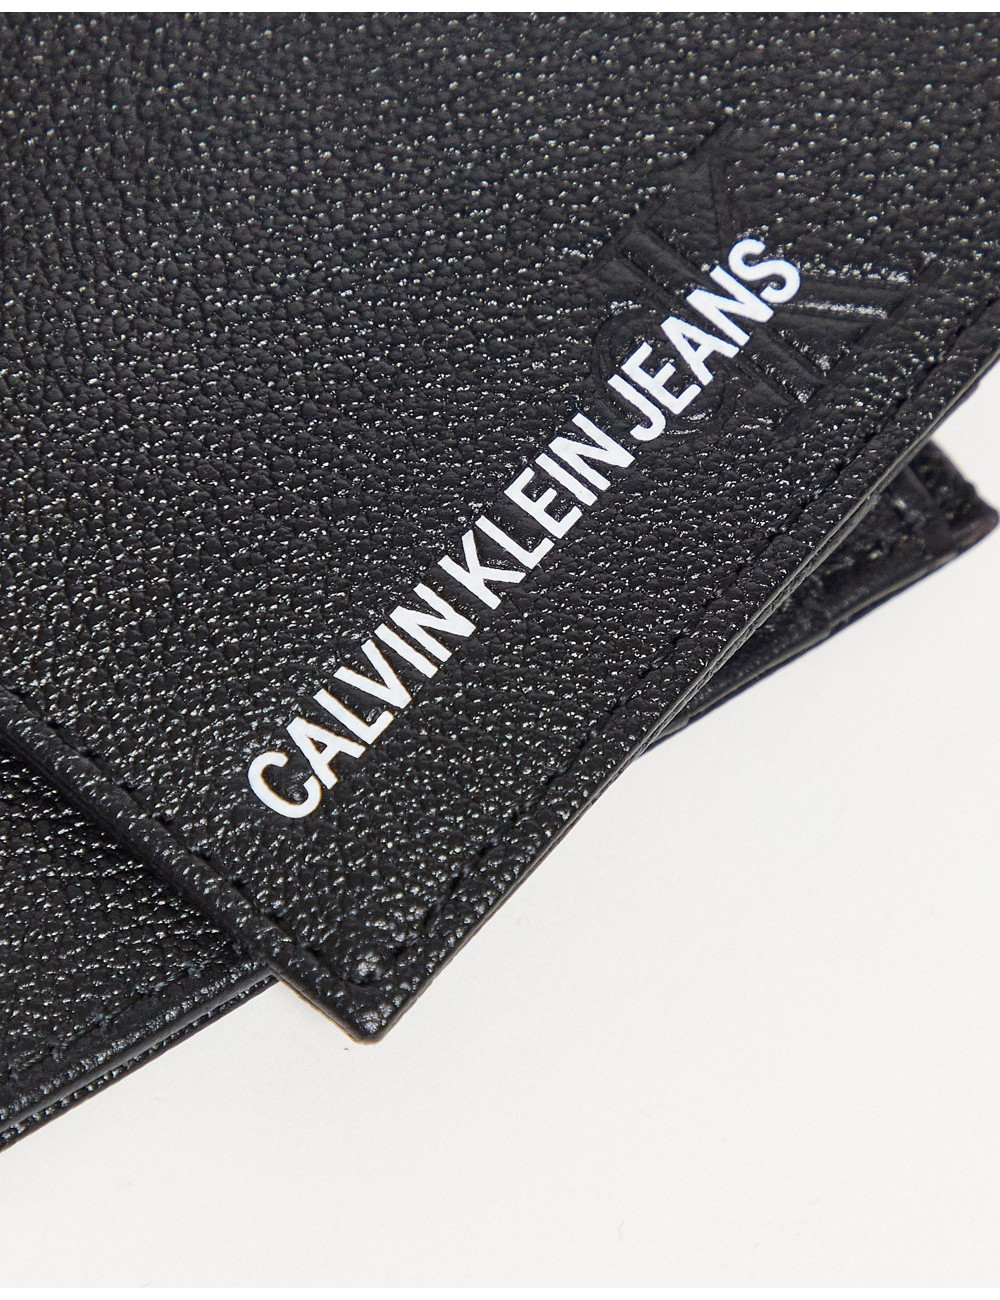 Calvin Klein Jeans leather...